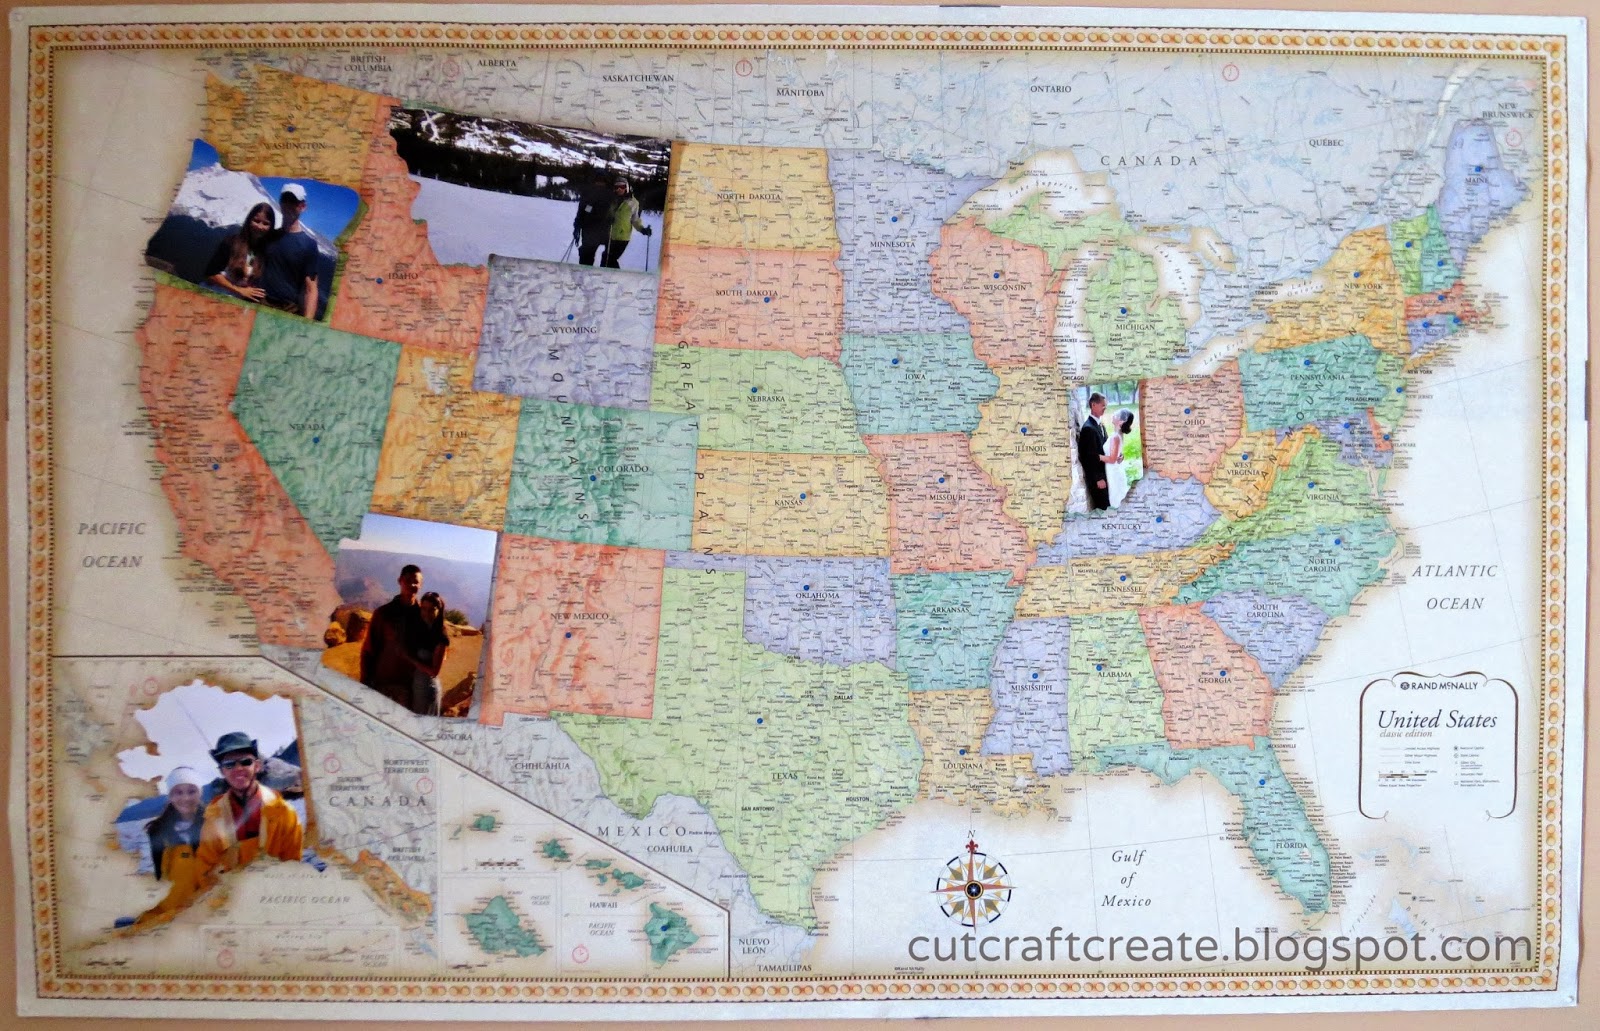 Cut Craft Create Map Inspired Home Decor 